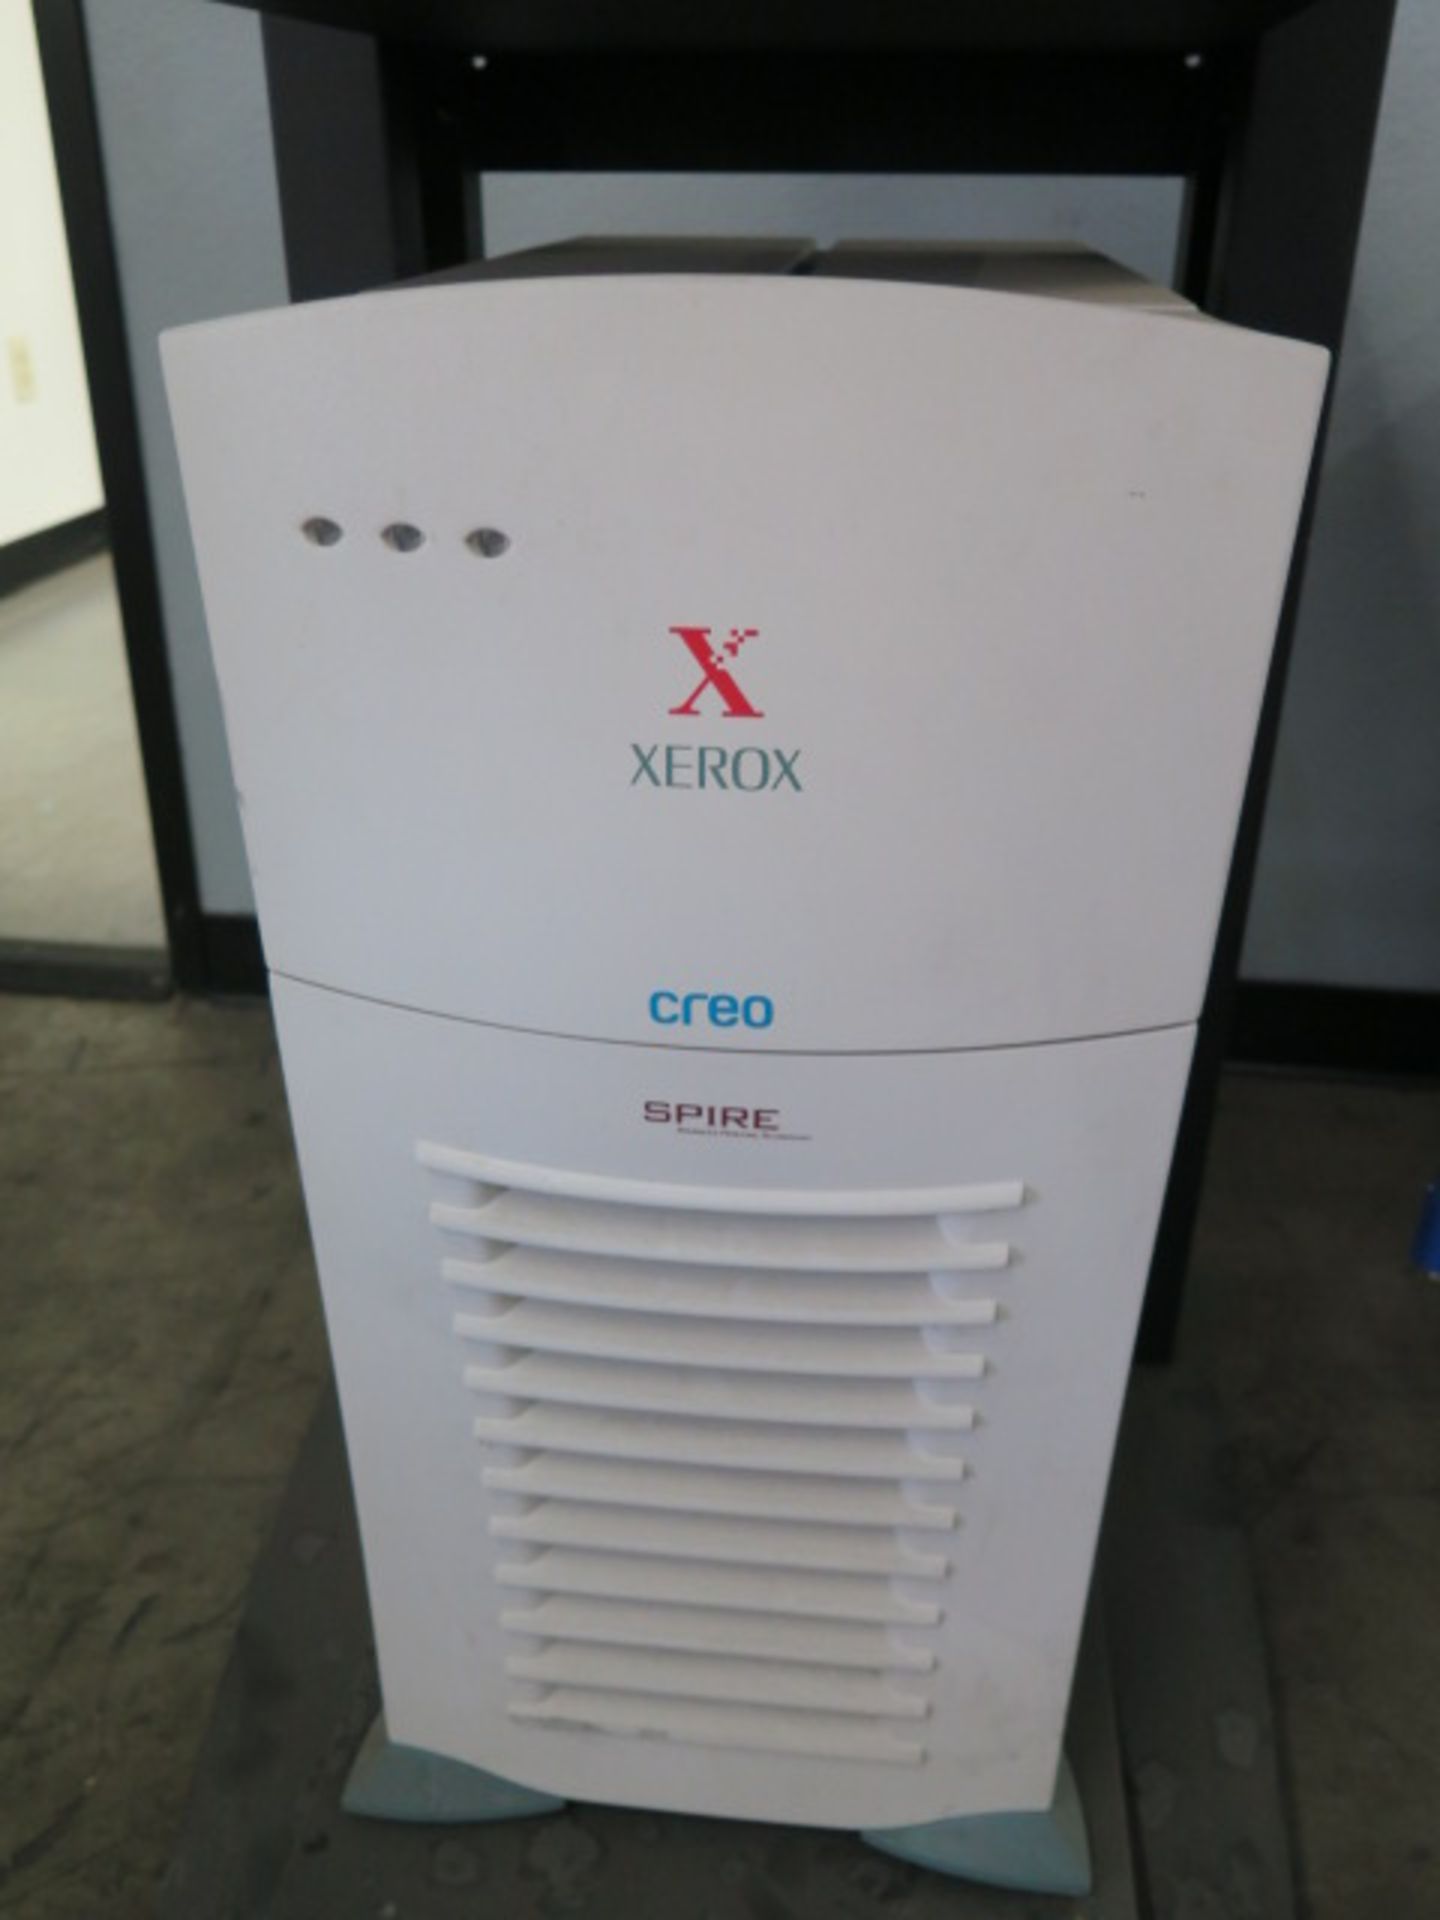 Xerox Creo Server Computer - Bild 2 aus 2